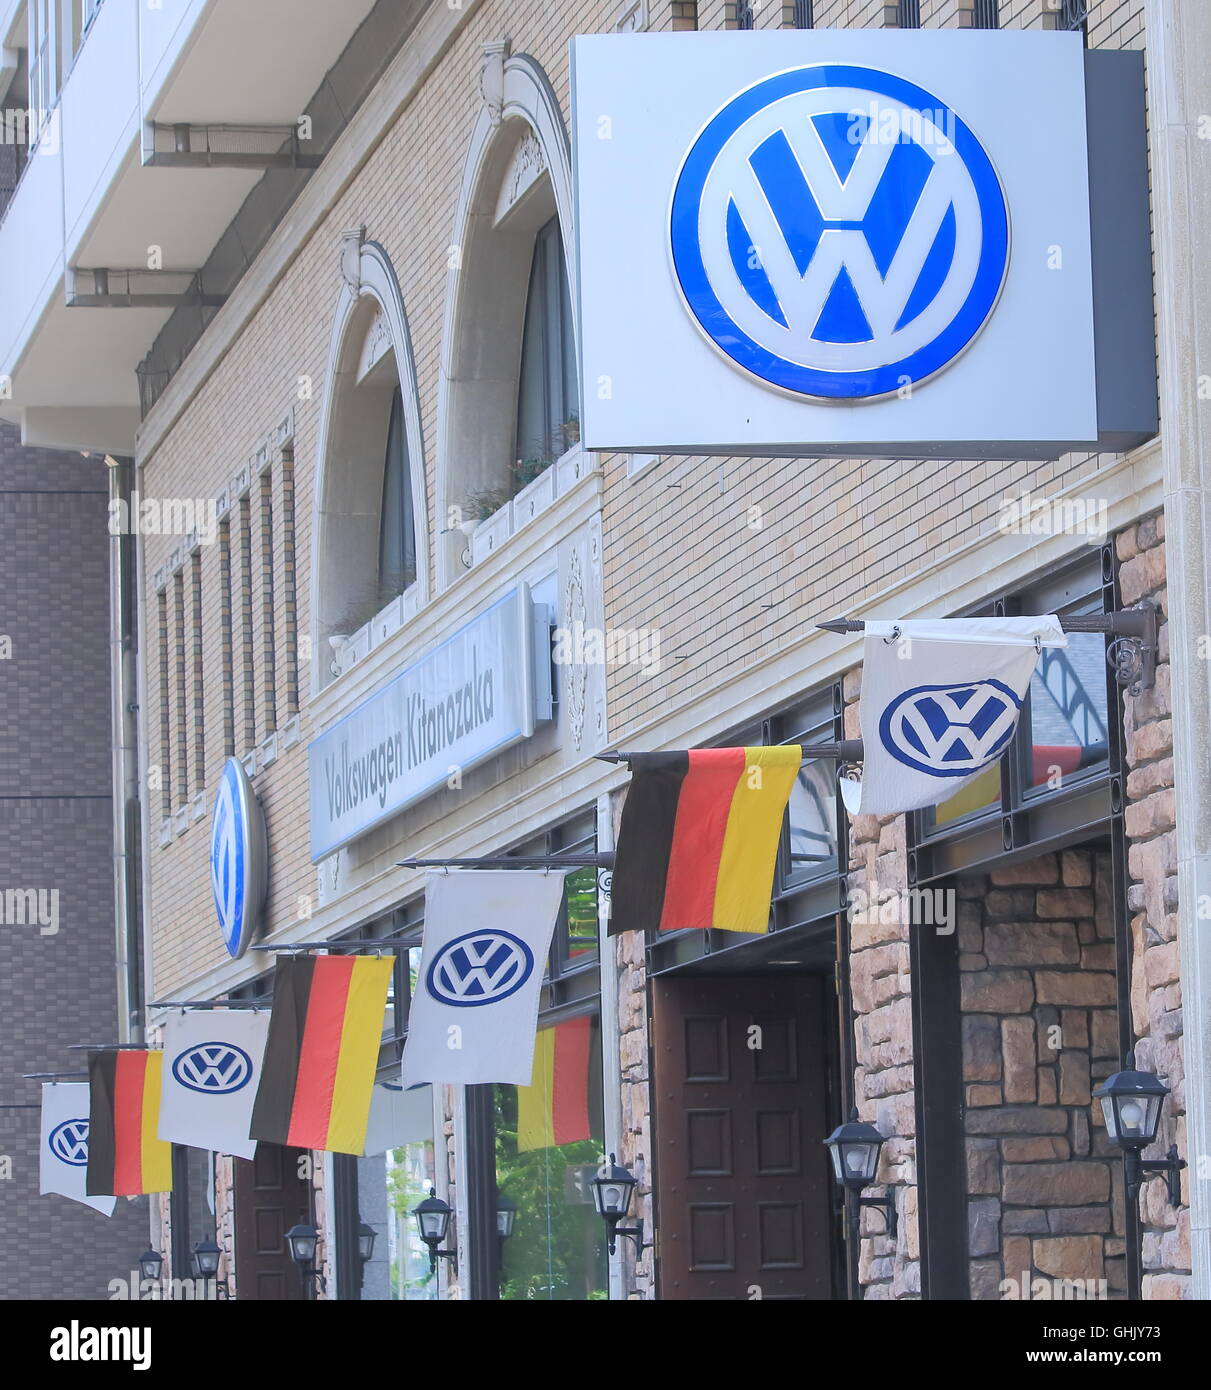 Volkswagen store German automobile manufacturer headquartered in Walfsburg Germany. Stock Photo